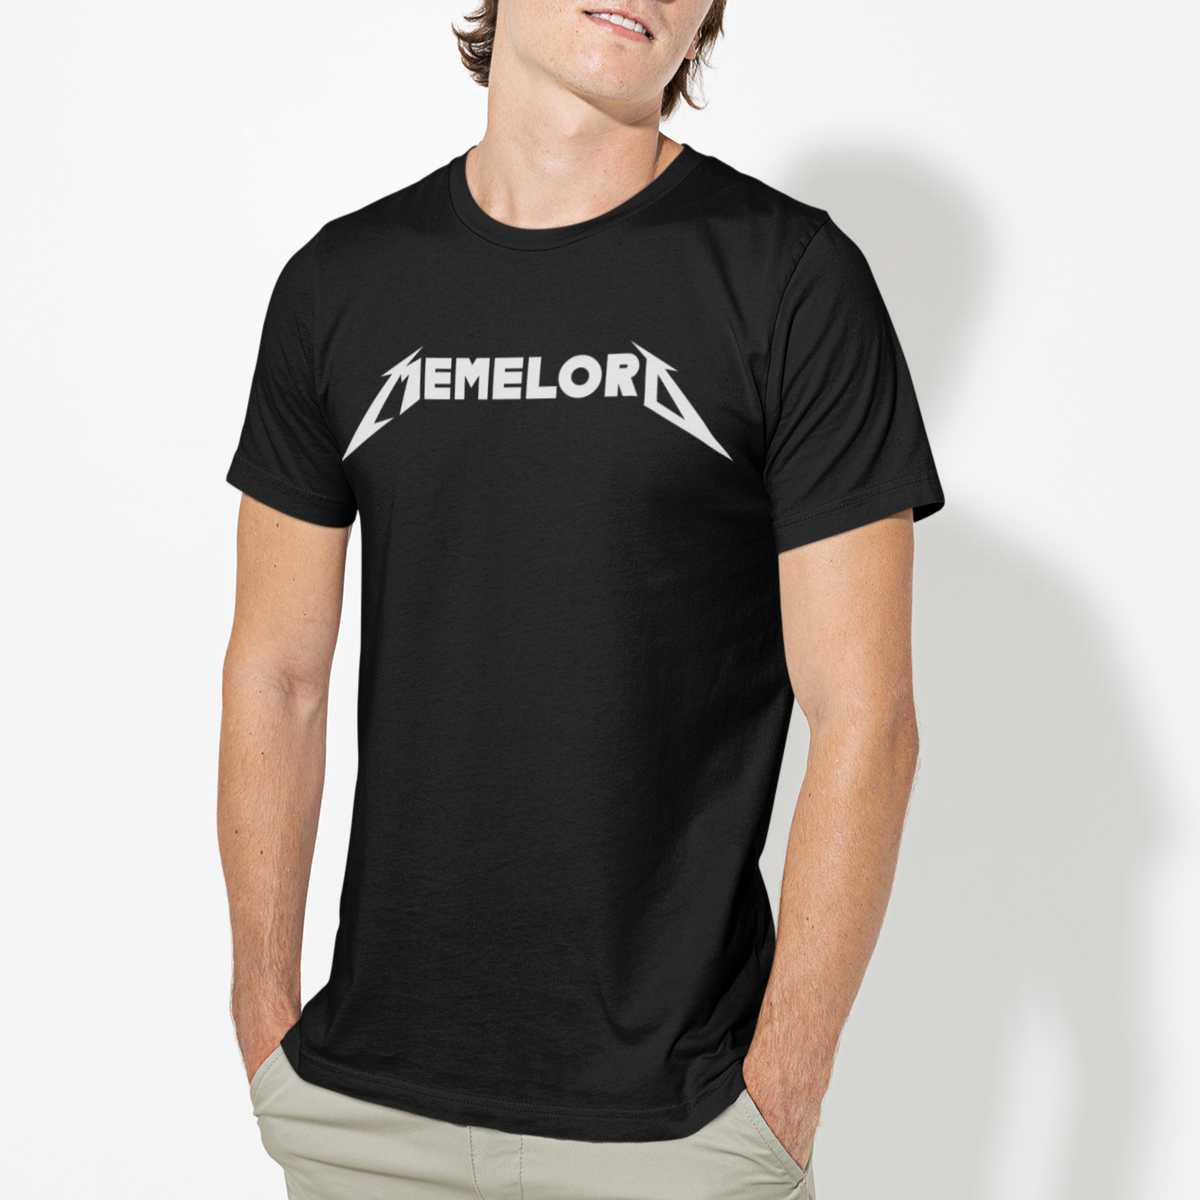 Memelord T-Shirt